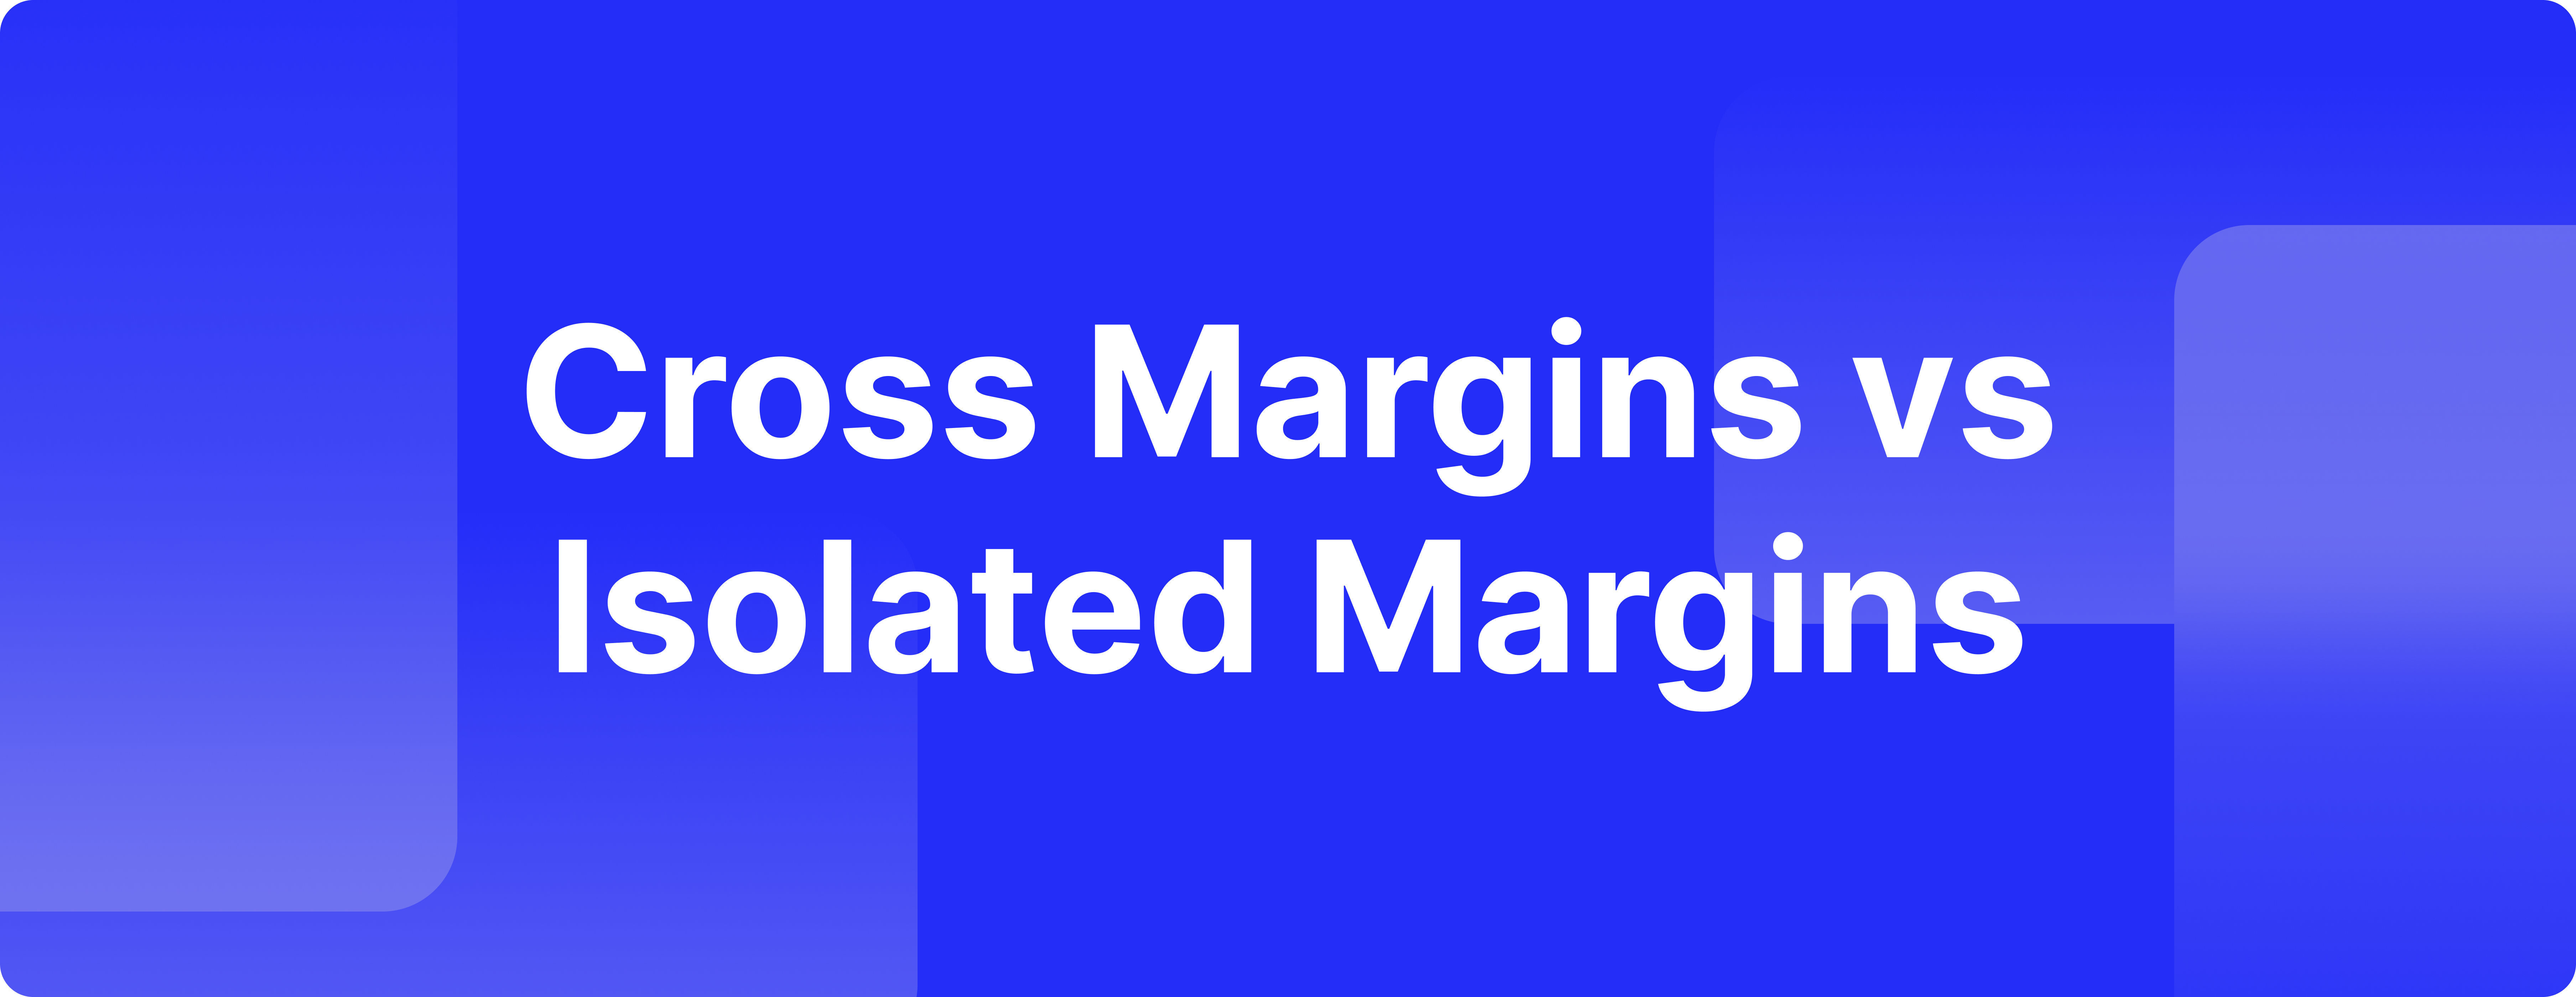 Cross Margin vs. Isolated Margin